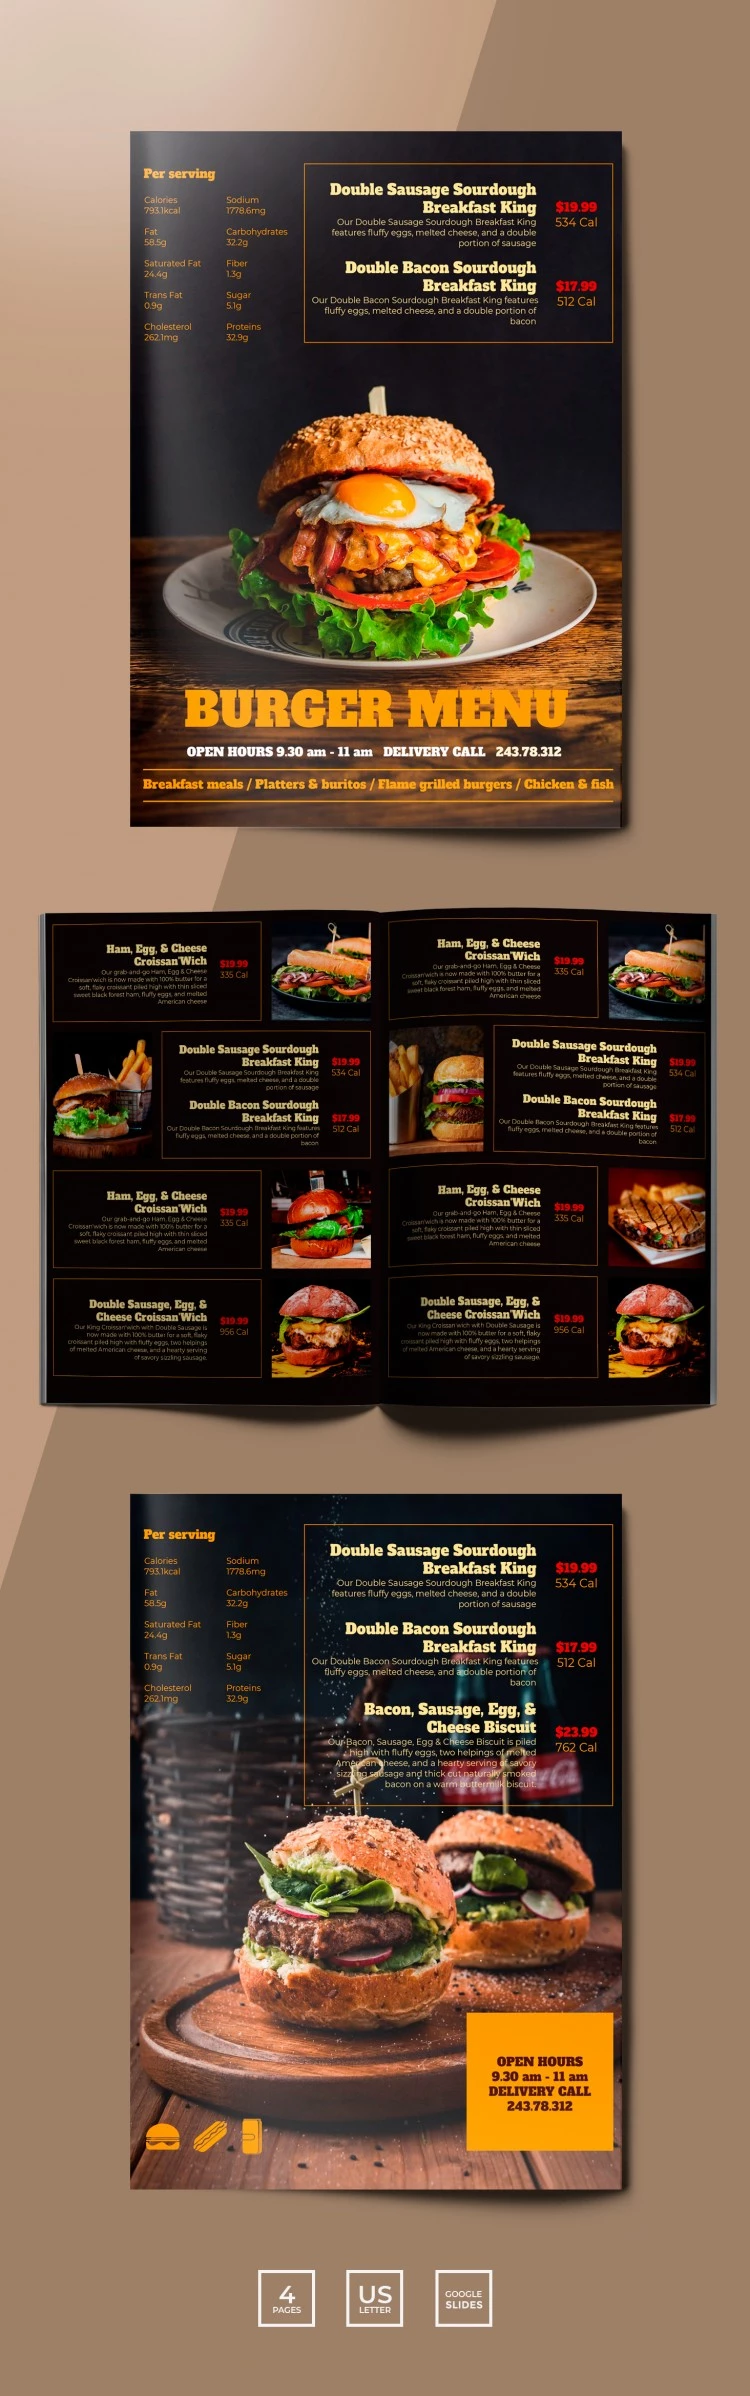 Burger Menü Restaurant - free Google Docs Template - 10061760